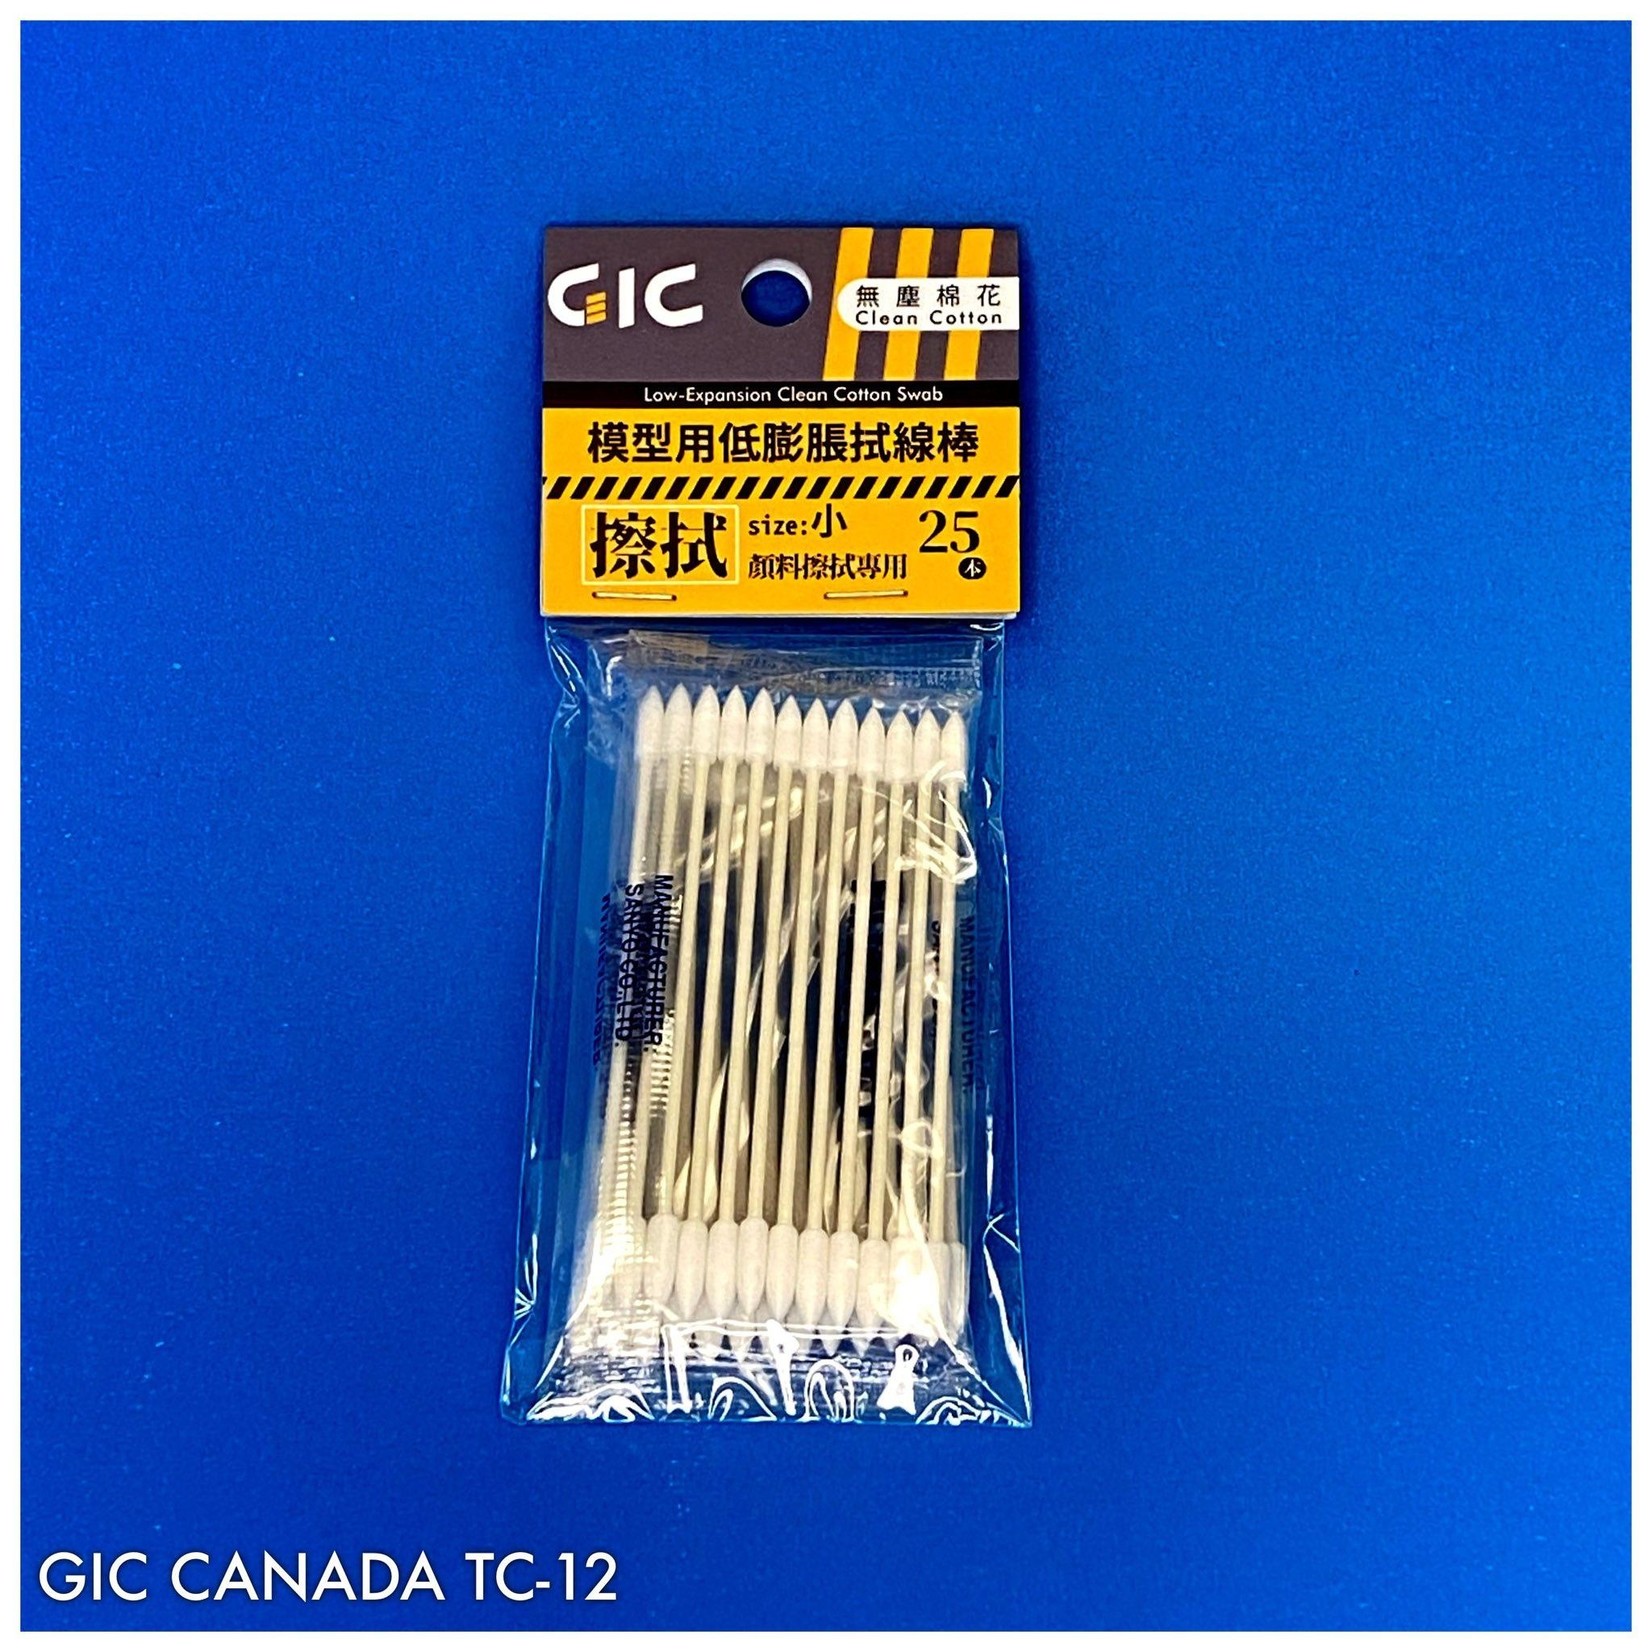 GIC GIC TC-12 LOW EXPANSION CLEAN COTTON SWAB SIZE SMALL